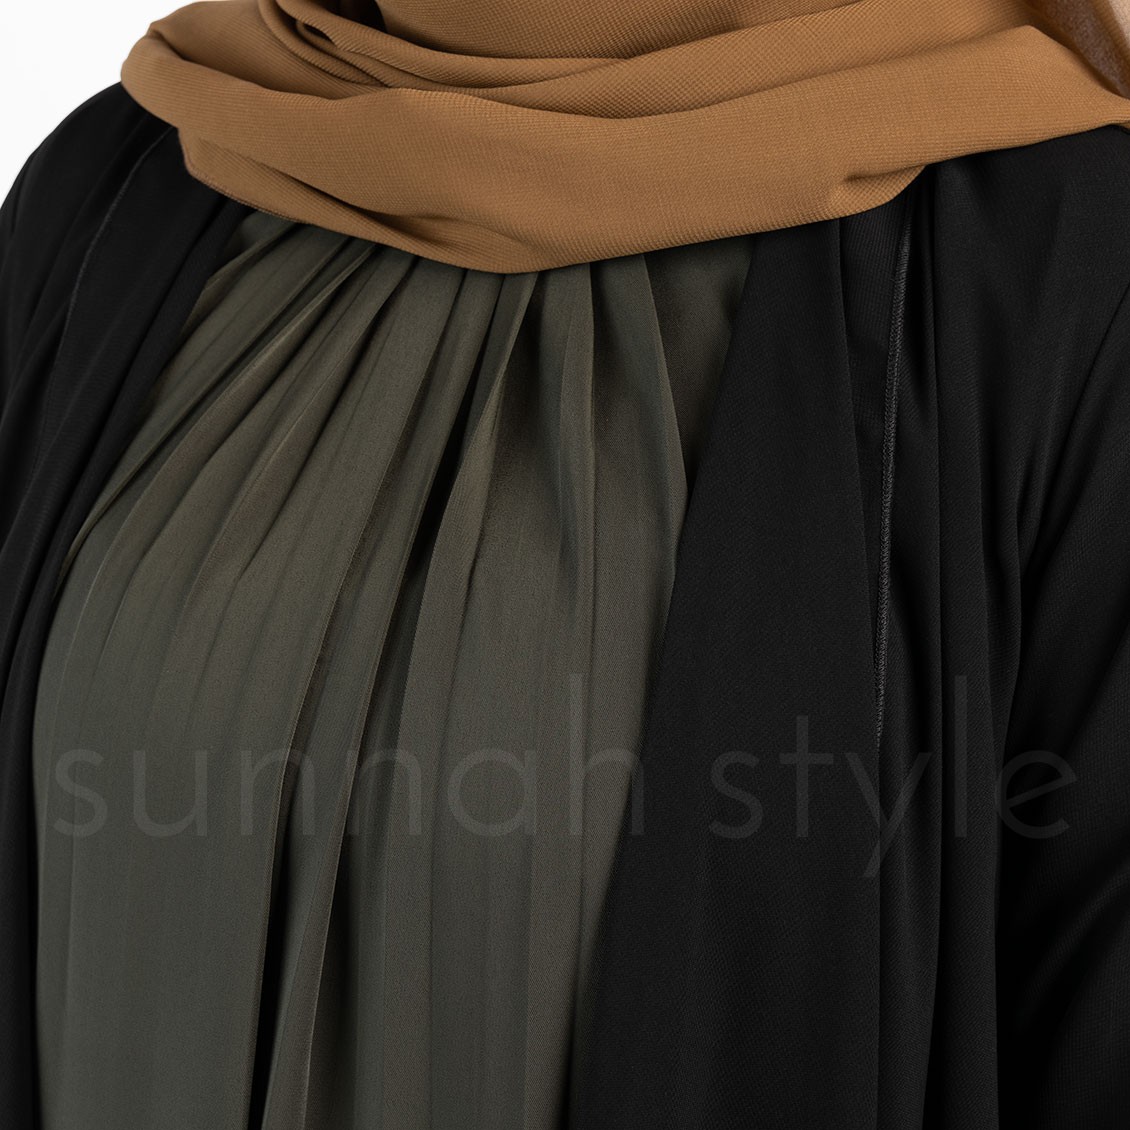 Sunnah Style - Chiffon Duster Cardigan Top Black